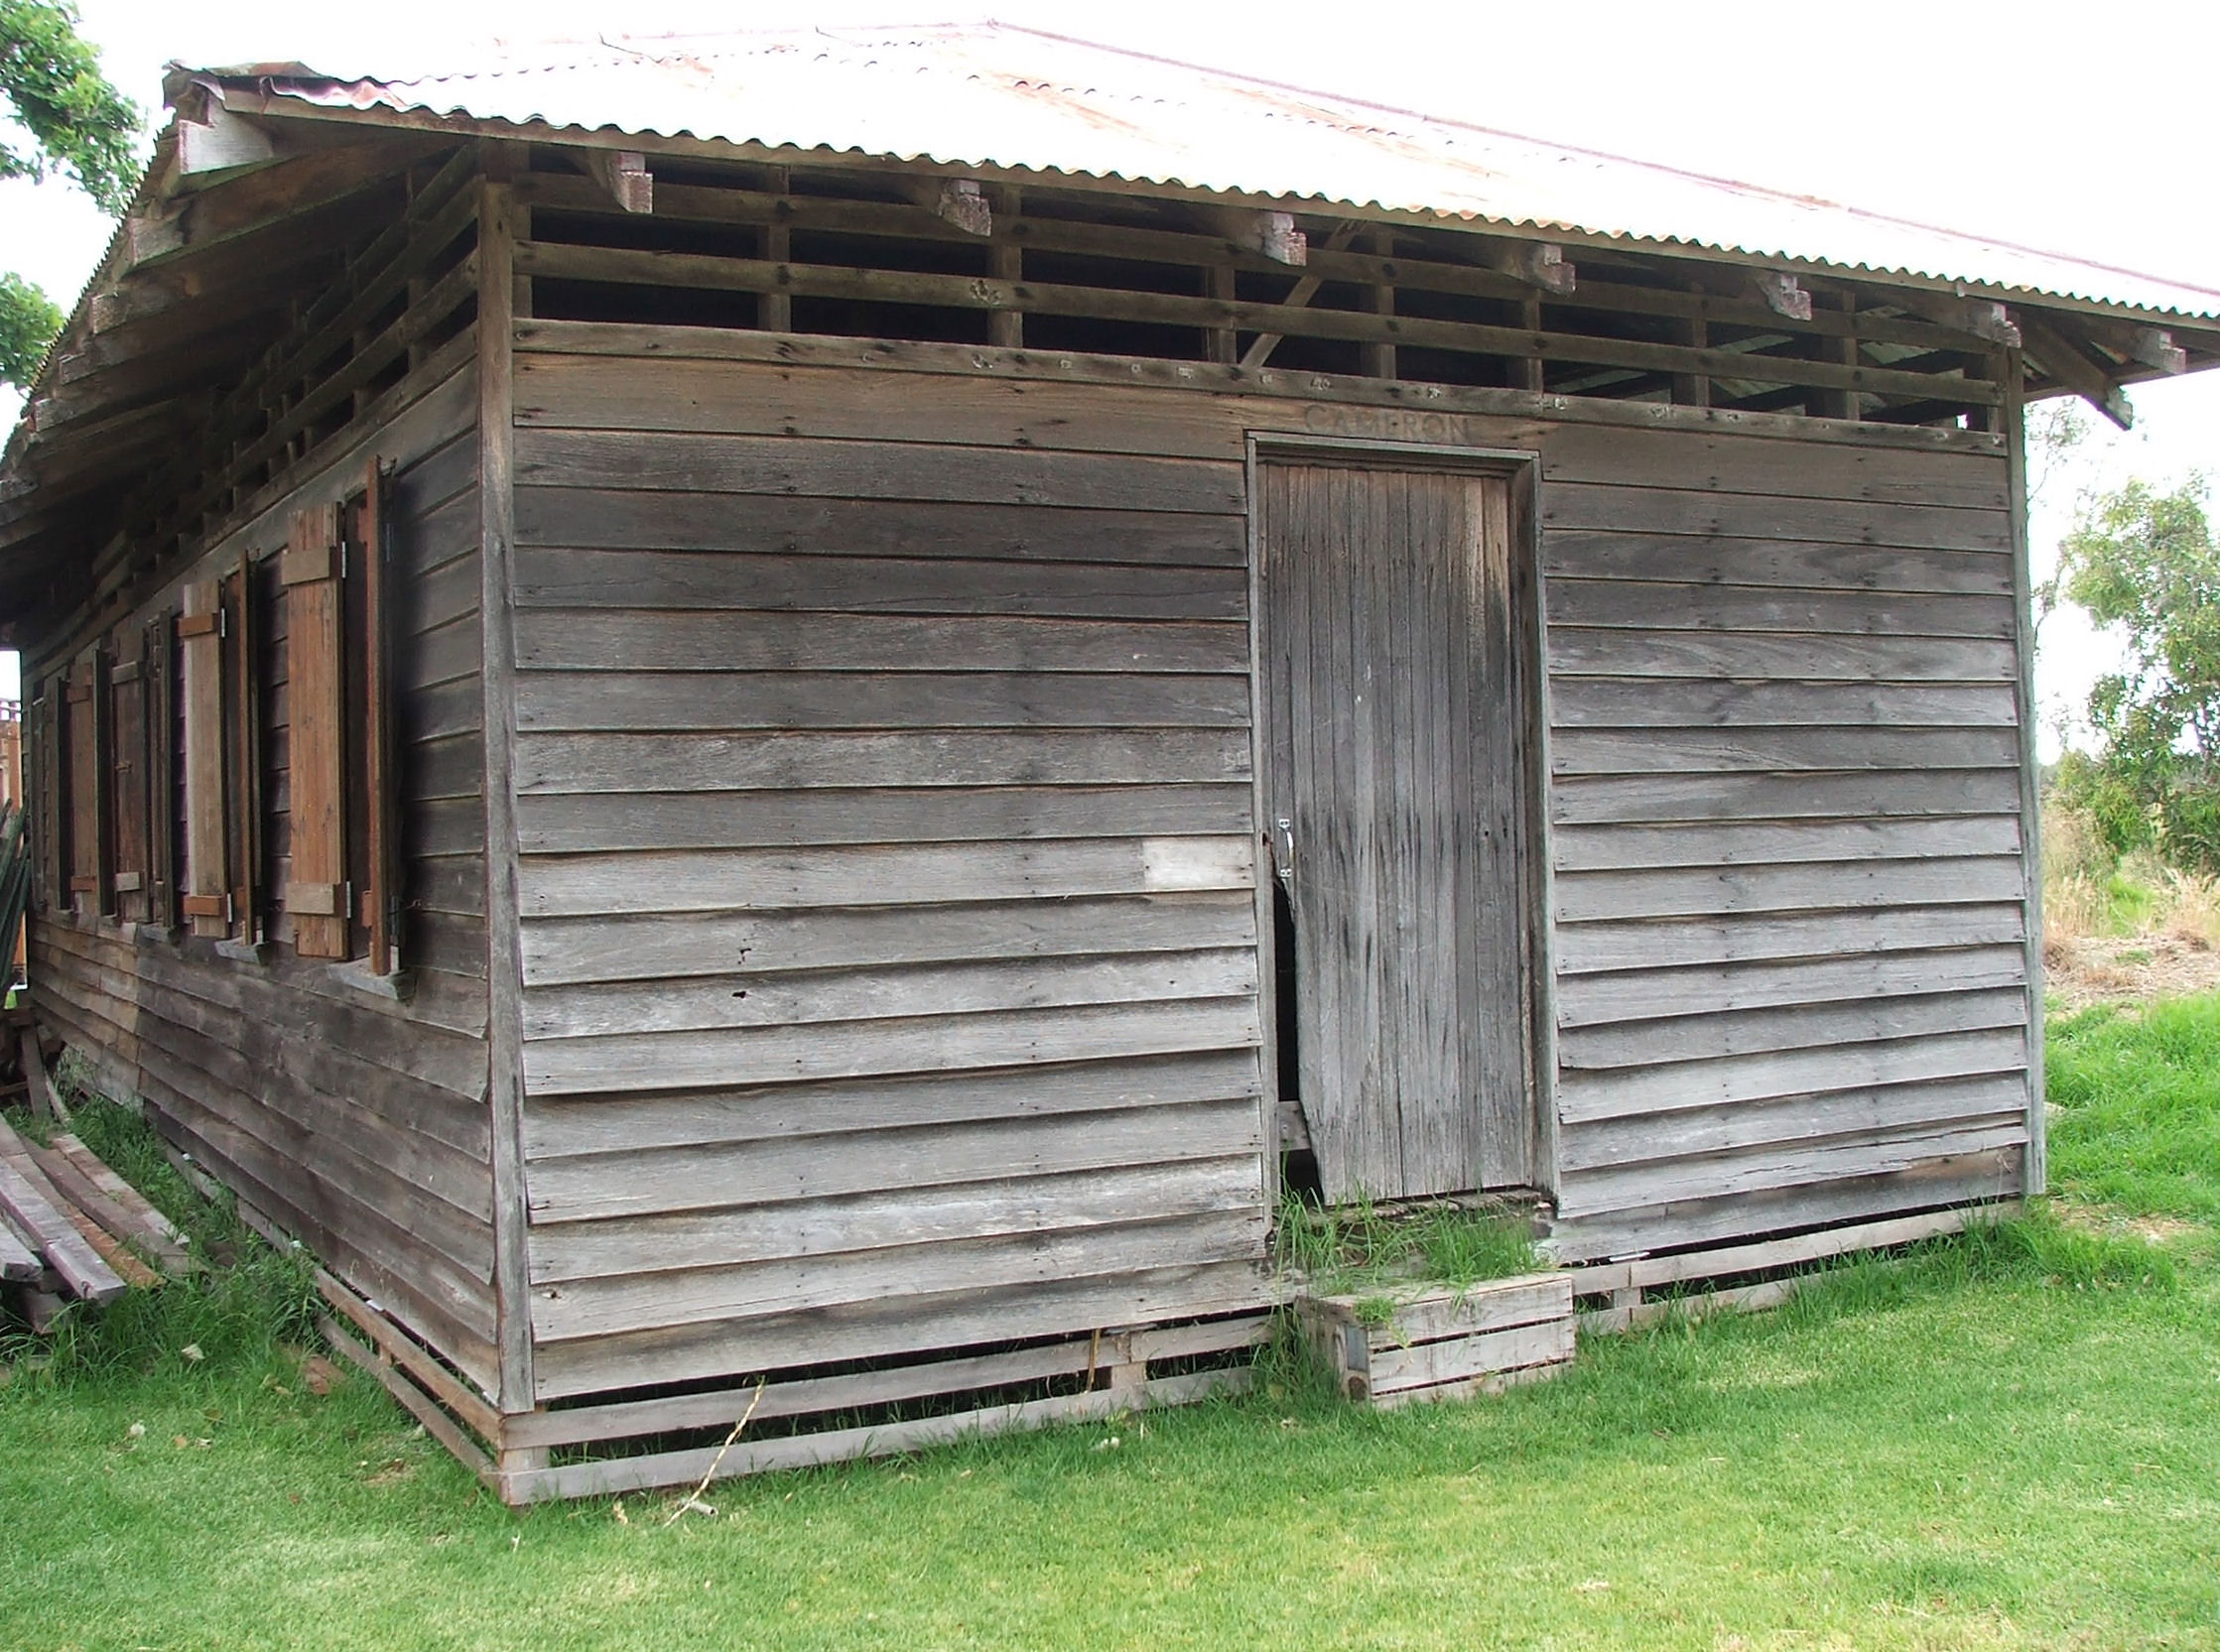 wood,shed,rustic,textures,weeds,building,old,derelict 